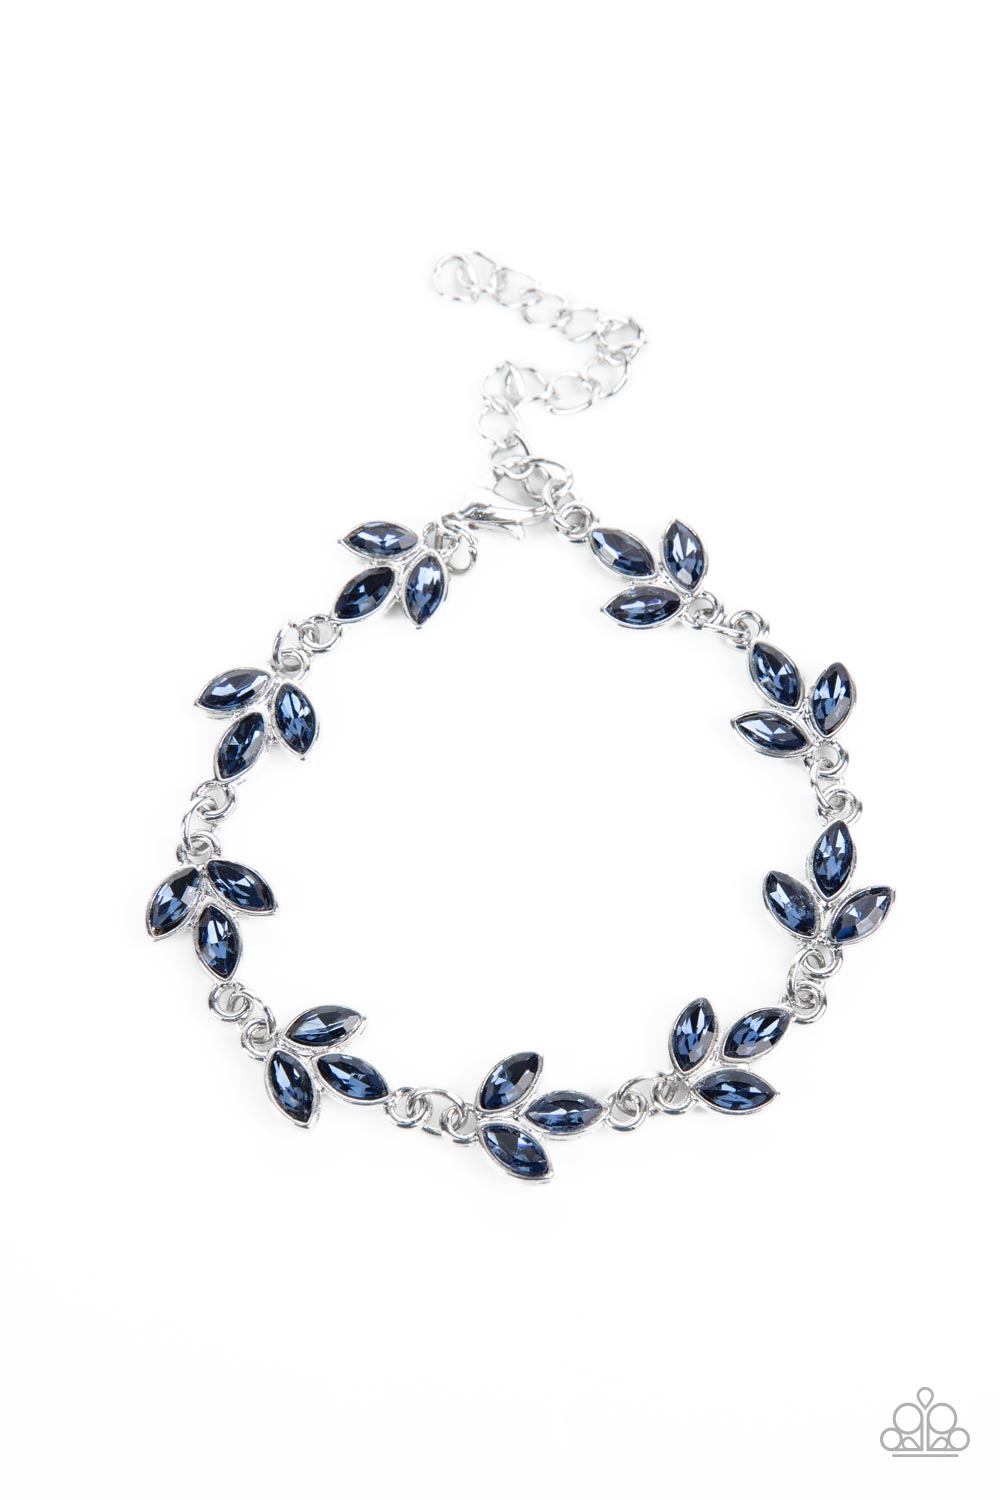 Gala Garland Blue Rhinestone Bracelet - Paparazzi Accessories- lightbox - CarasShop.com - $5 Jewelry by Cara Jewels